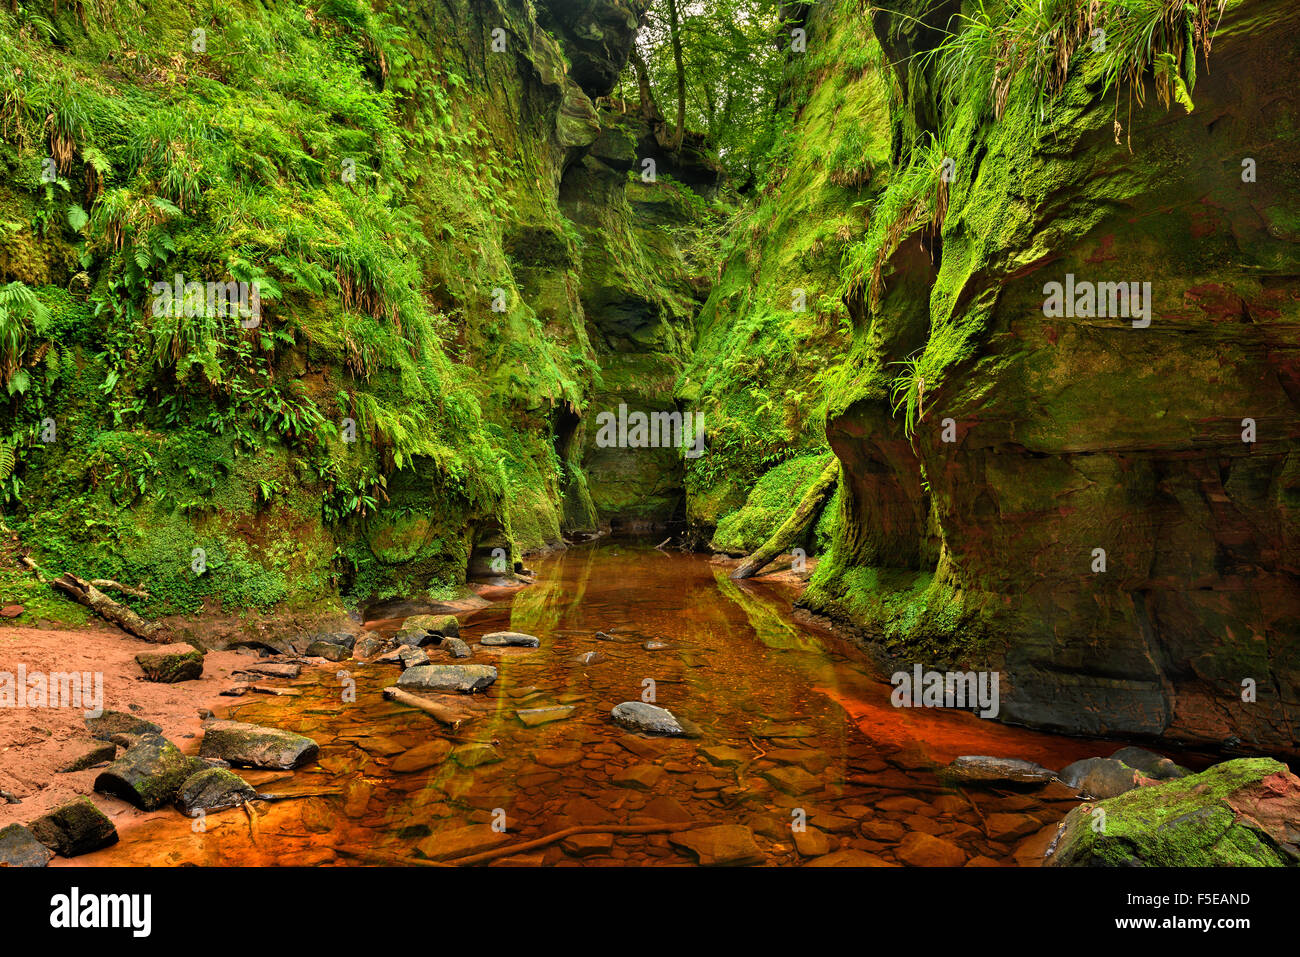 Finnich Glen, also known as Devil's Pulpit near Loch Lomond, Scotland, United Kingdom. Hdr processed. Stock Photo